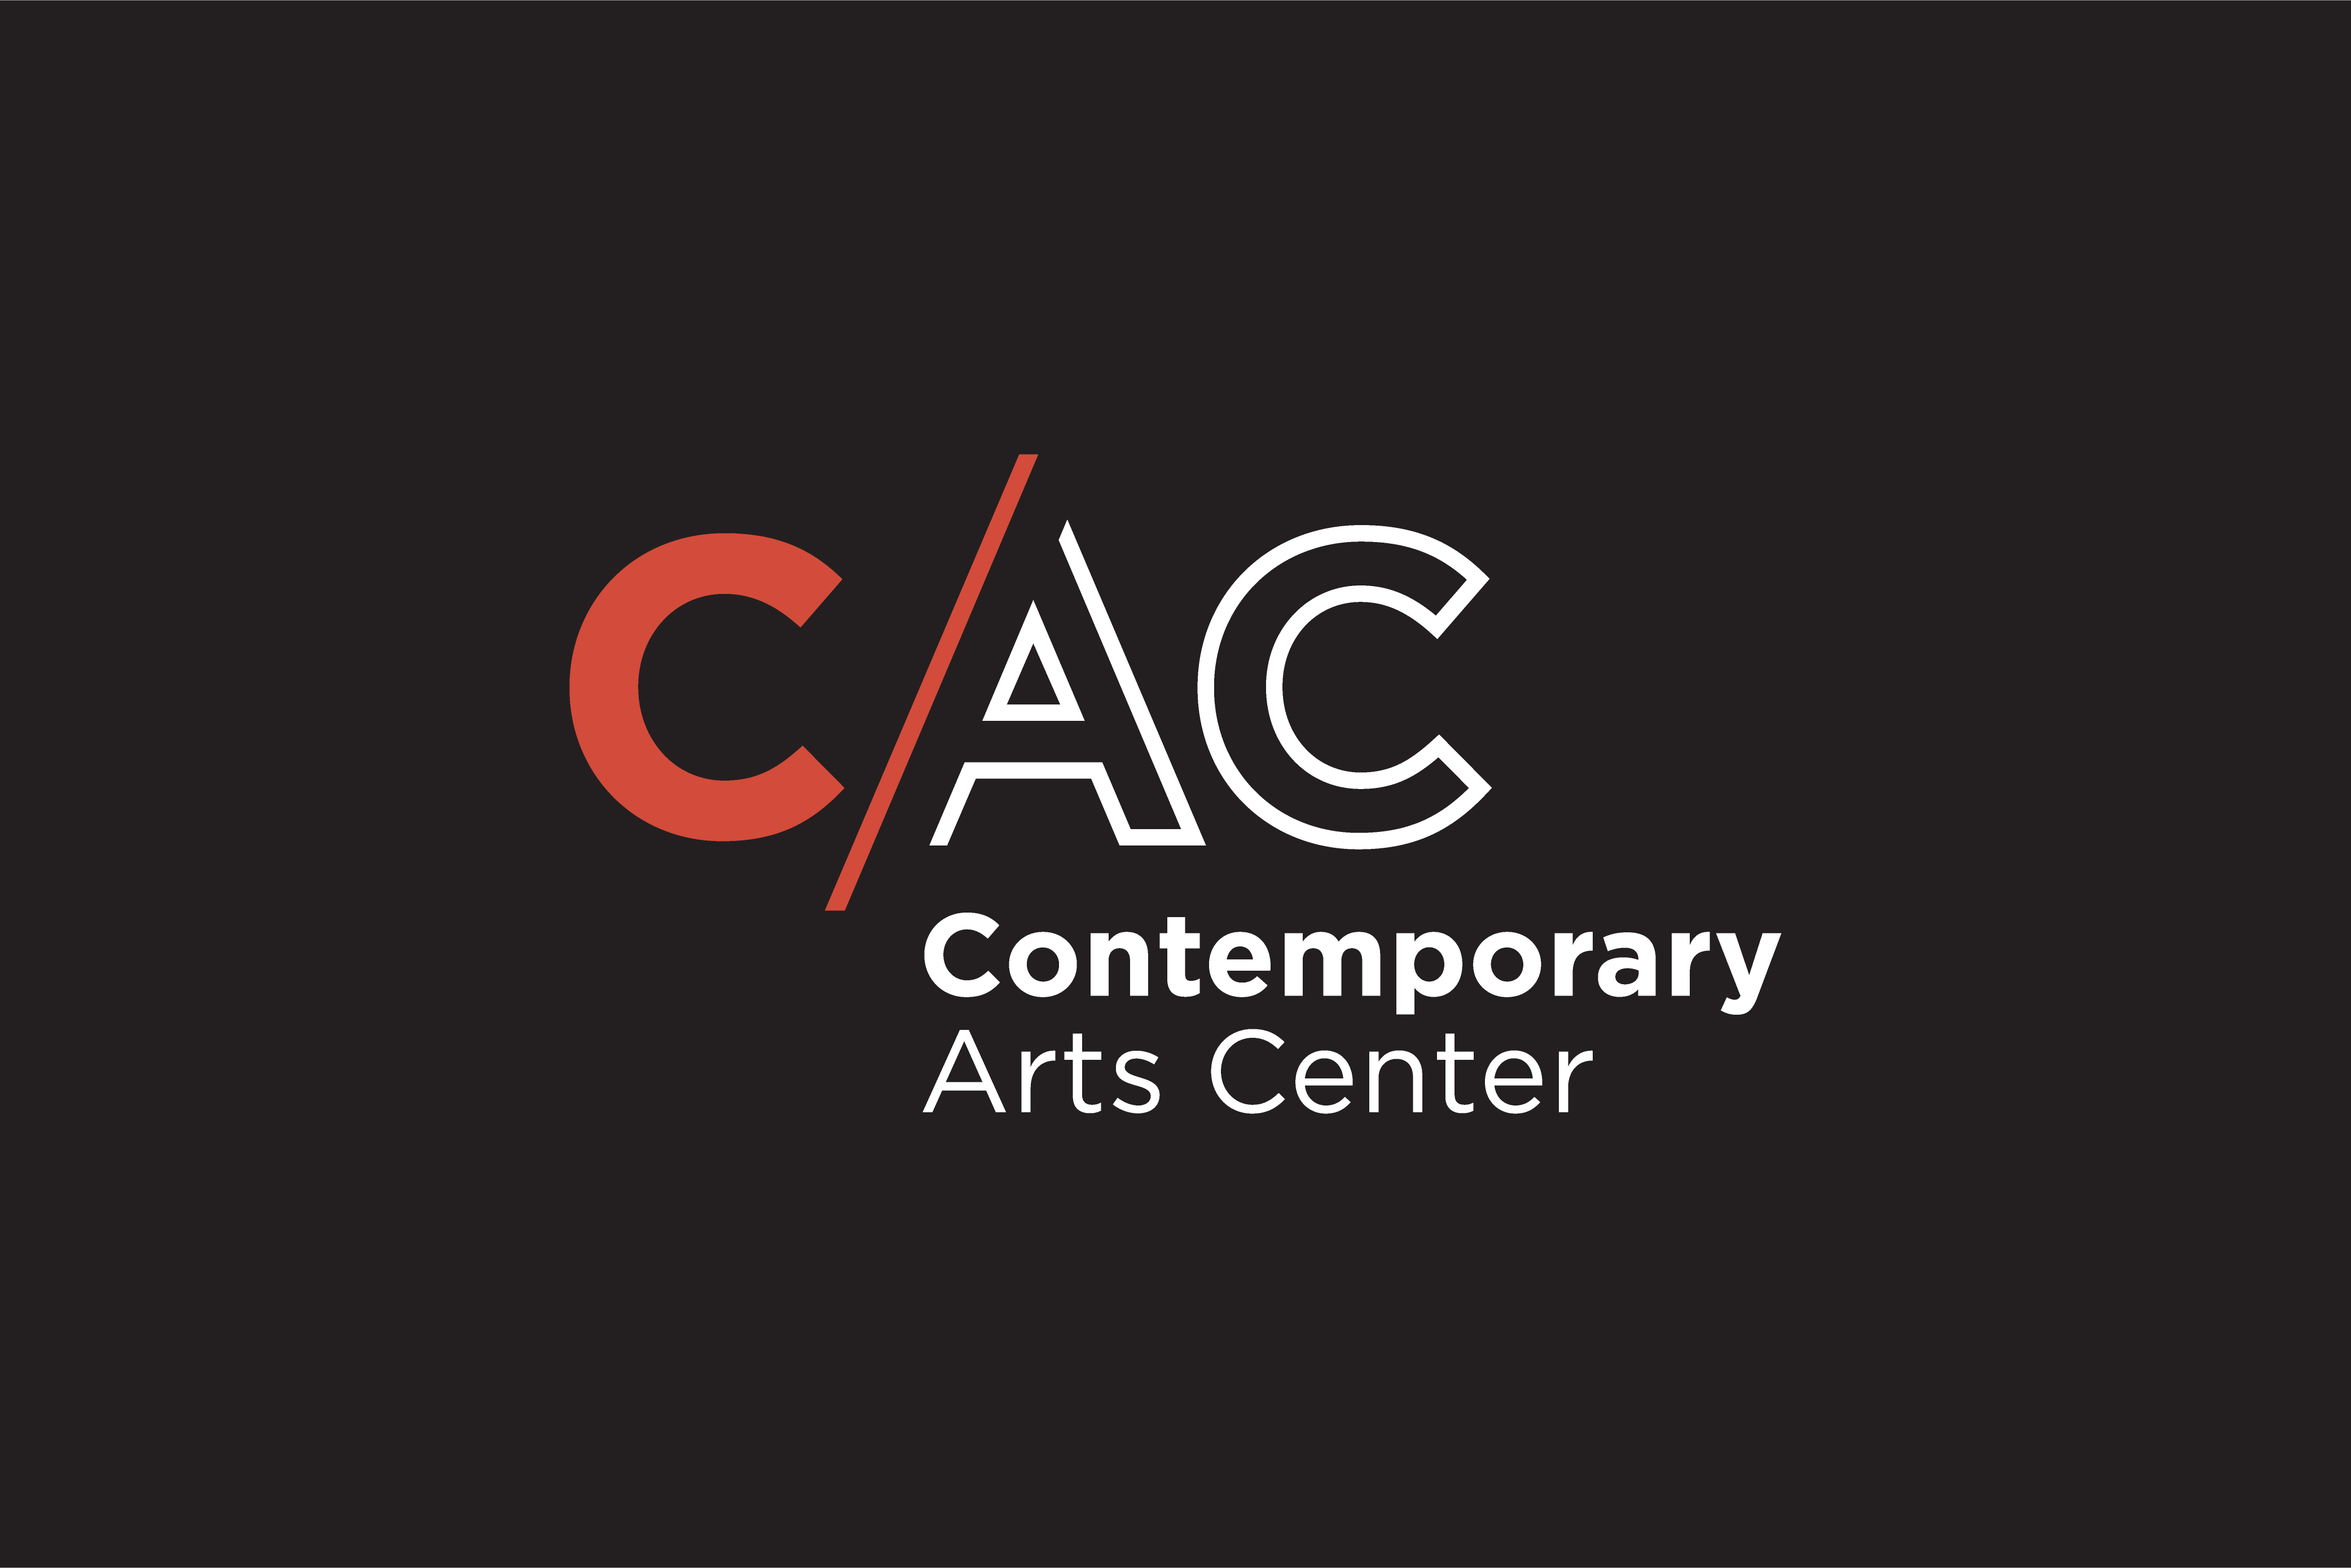 The Contemporary Arts Center